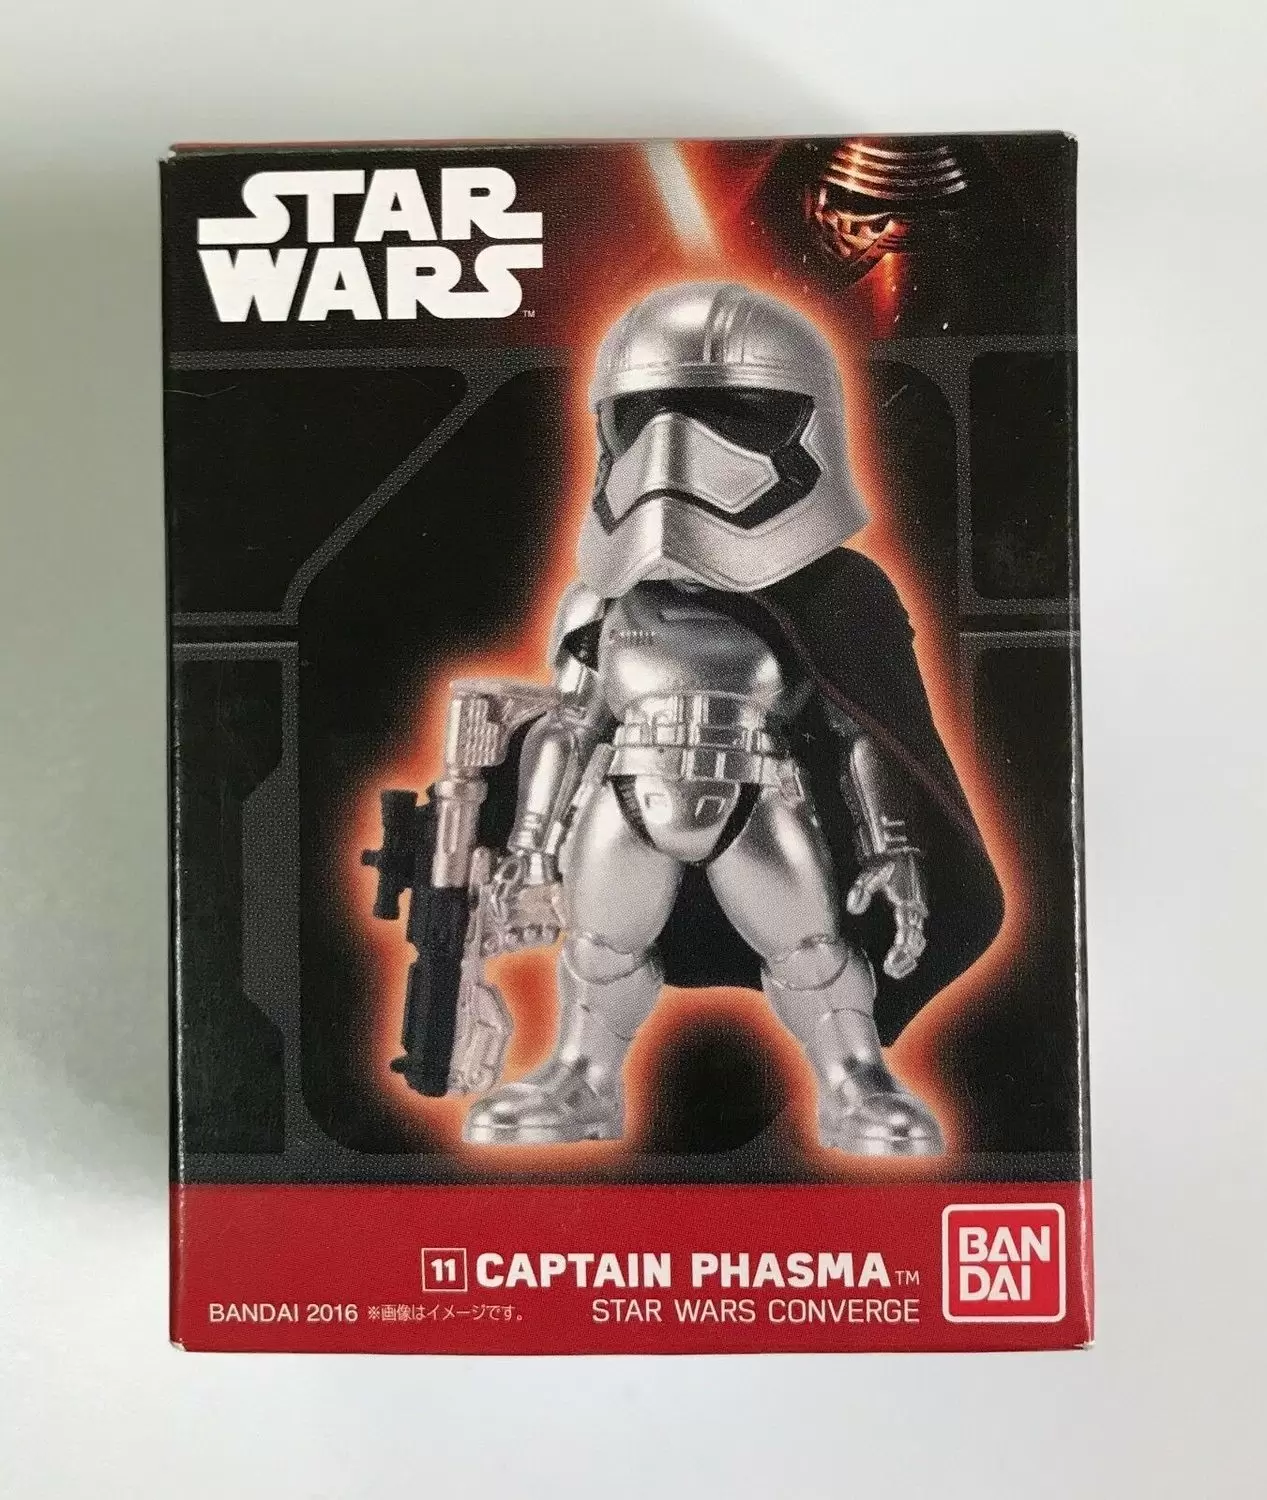 Star Wars Converge - Captain Phasma